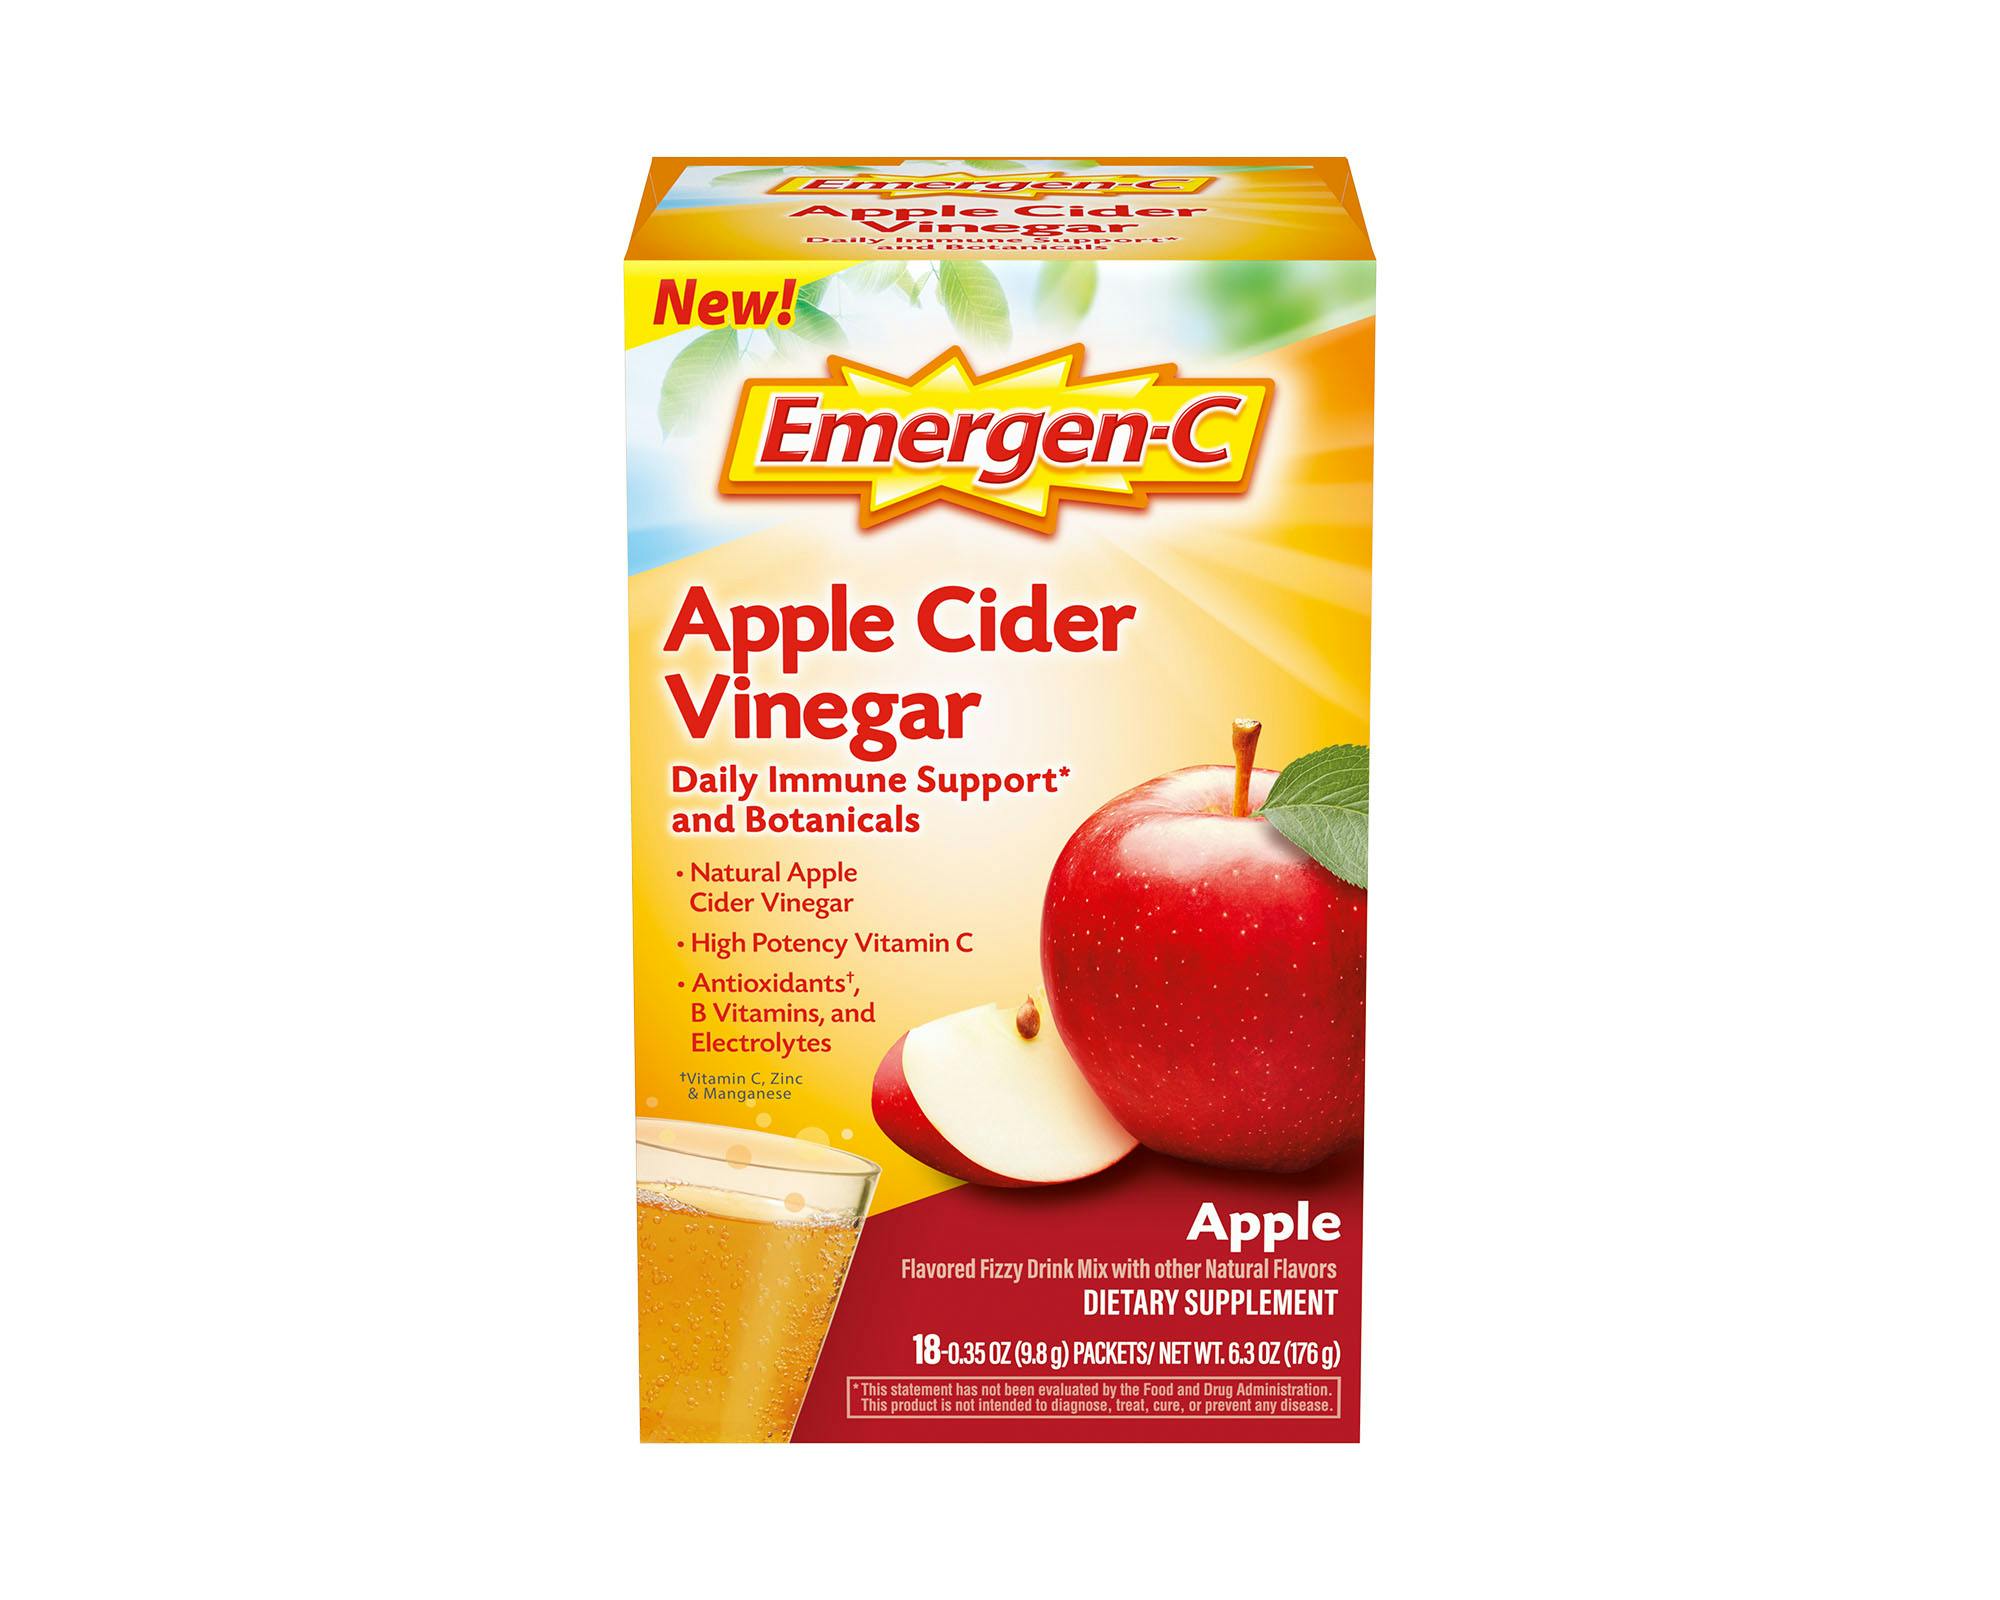 Apple Cider Vinegar Botanicals Immune Support box